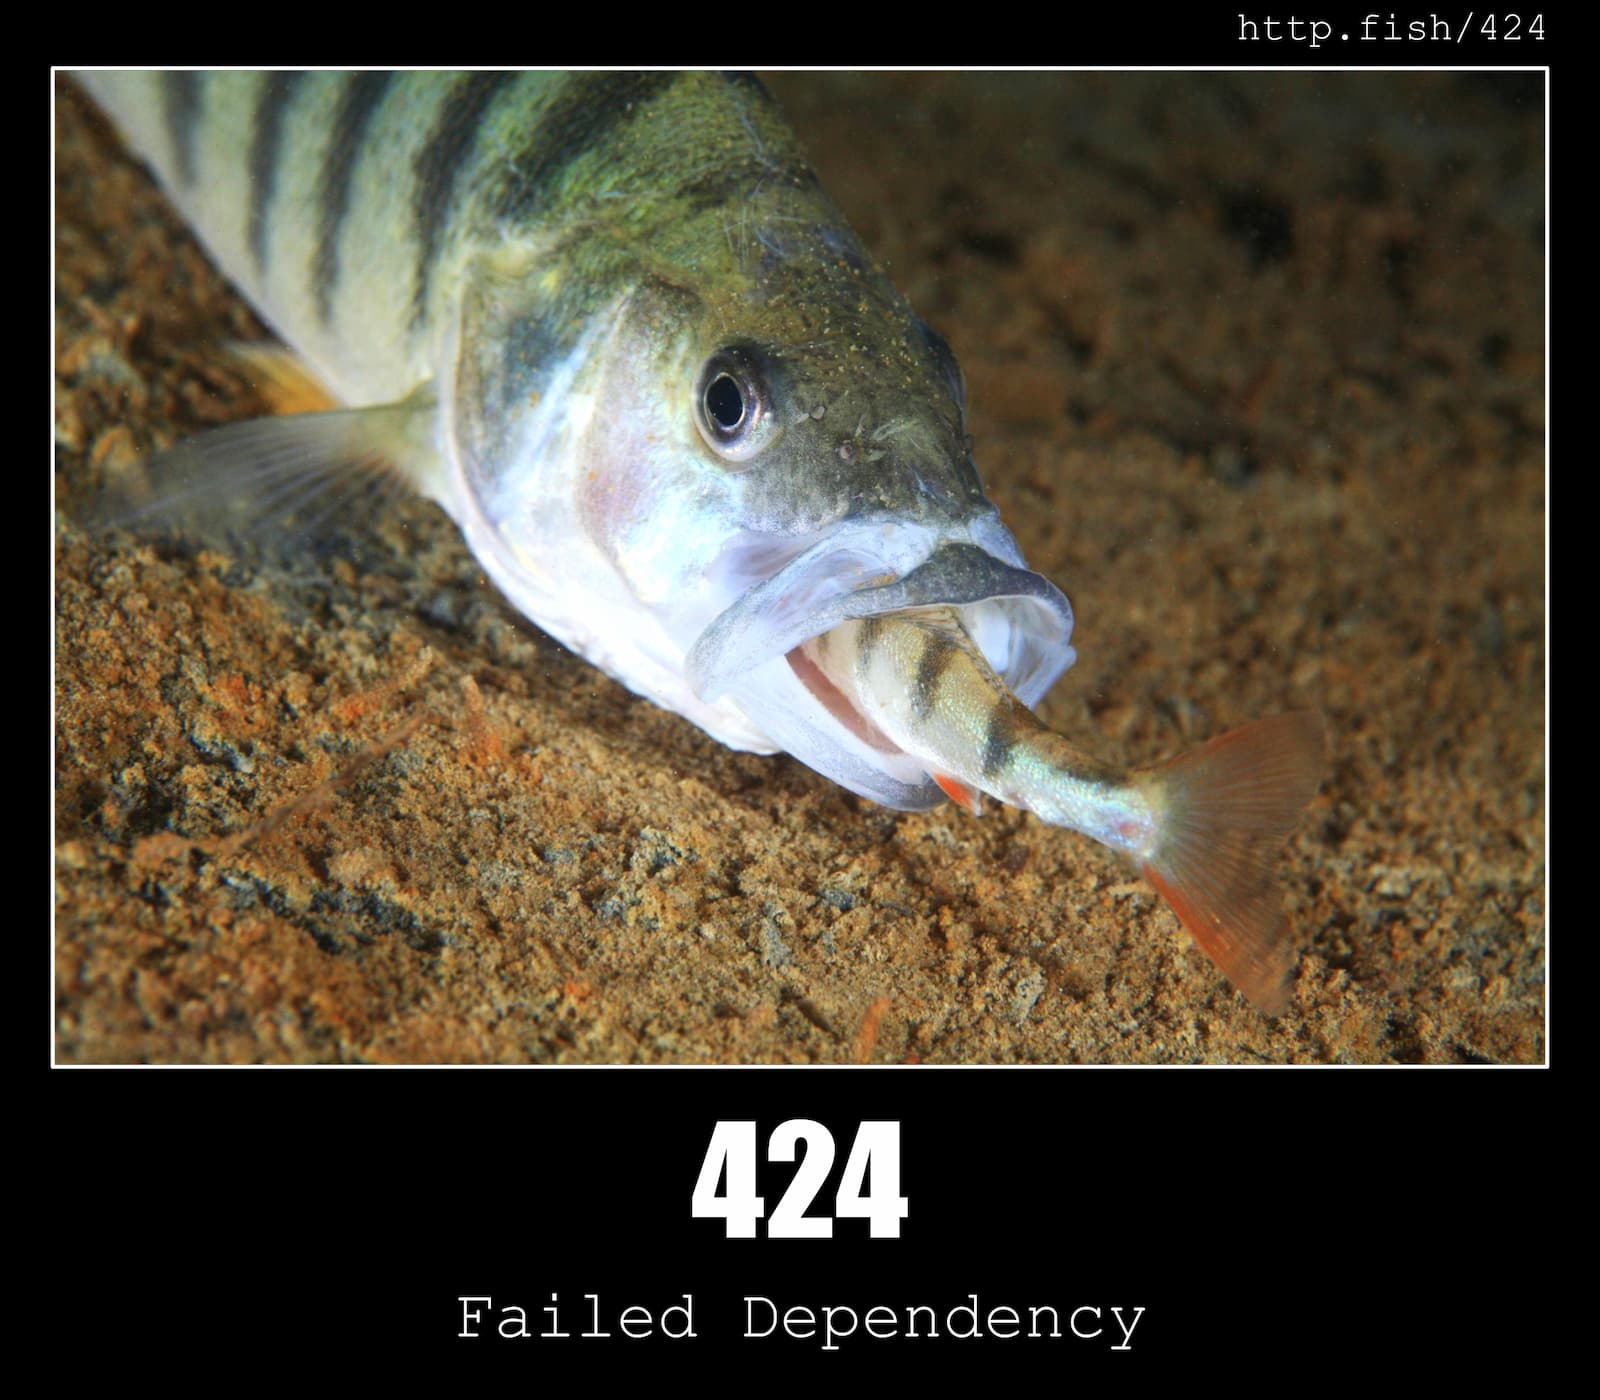 HTTP Status Code 424 Failed Dependency & Fish